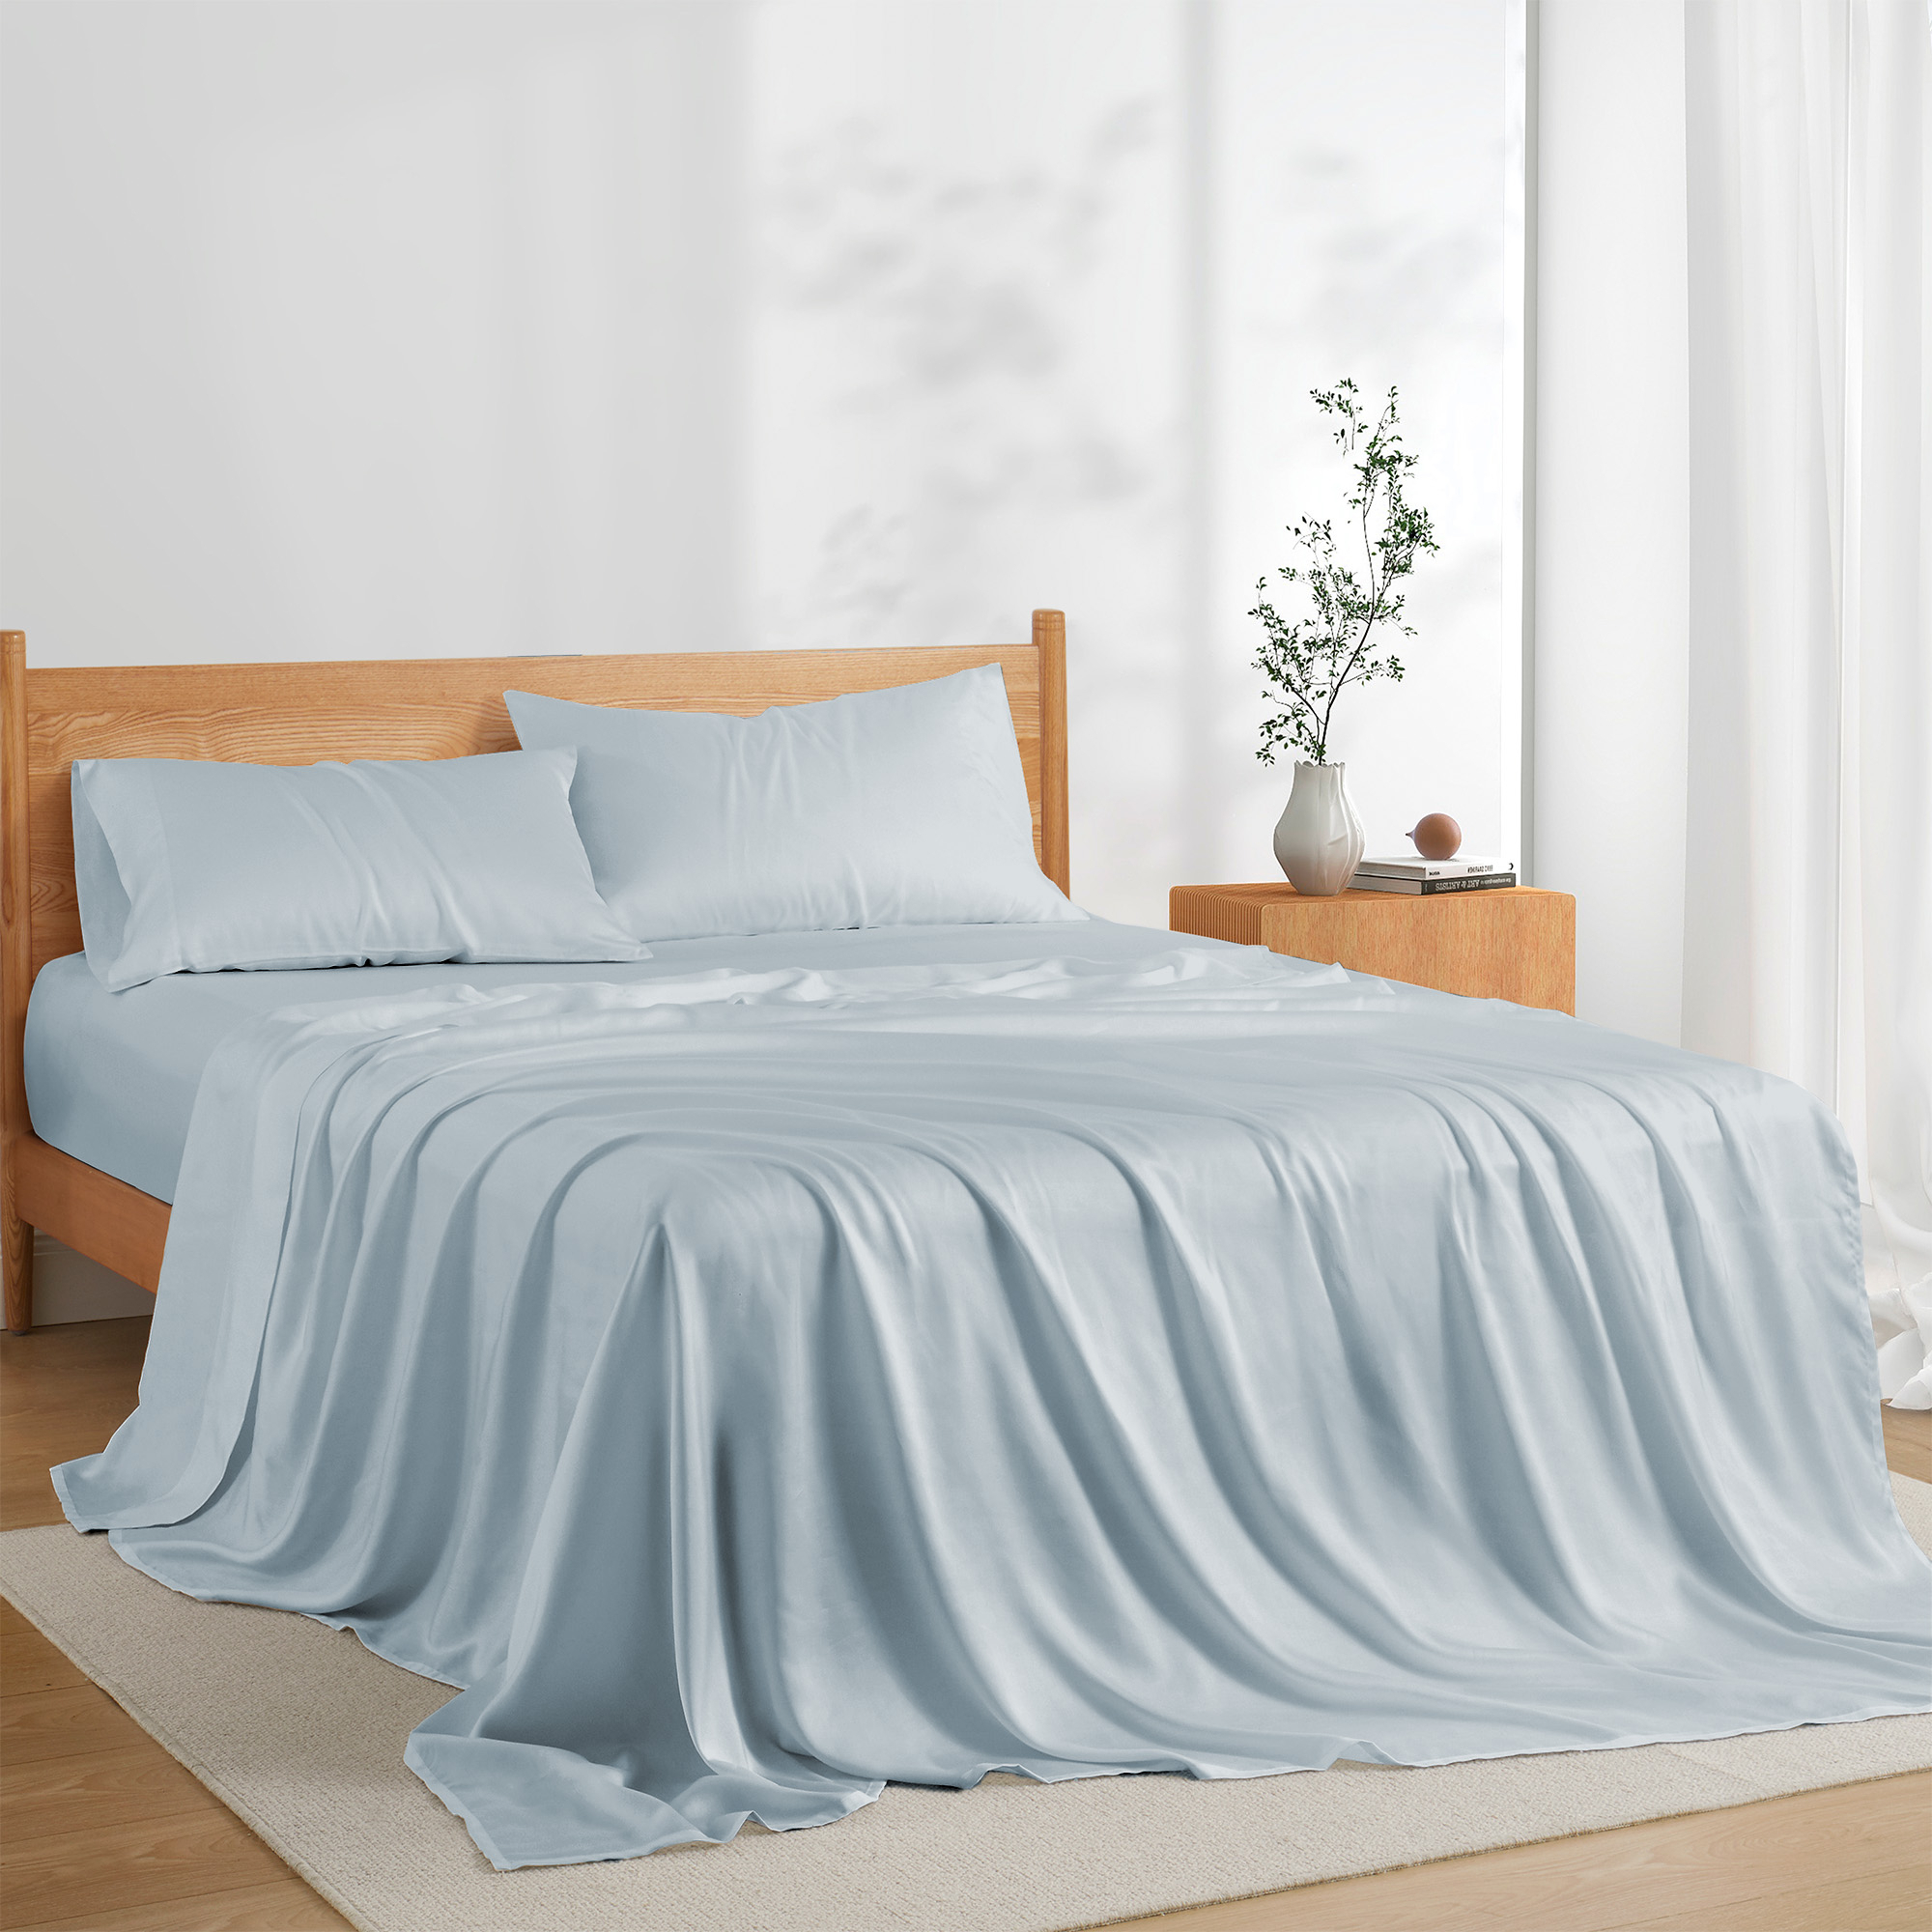 Silky Soft TENCELâ¢ Lyocell Cooling Sheet Set-Breathability And Moisture-wicking Bedding Set - Misty Blue, Twin